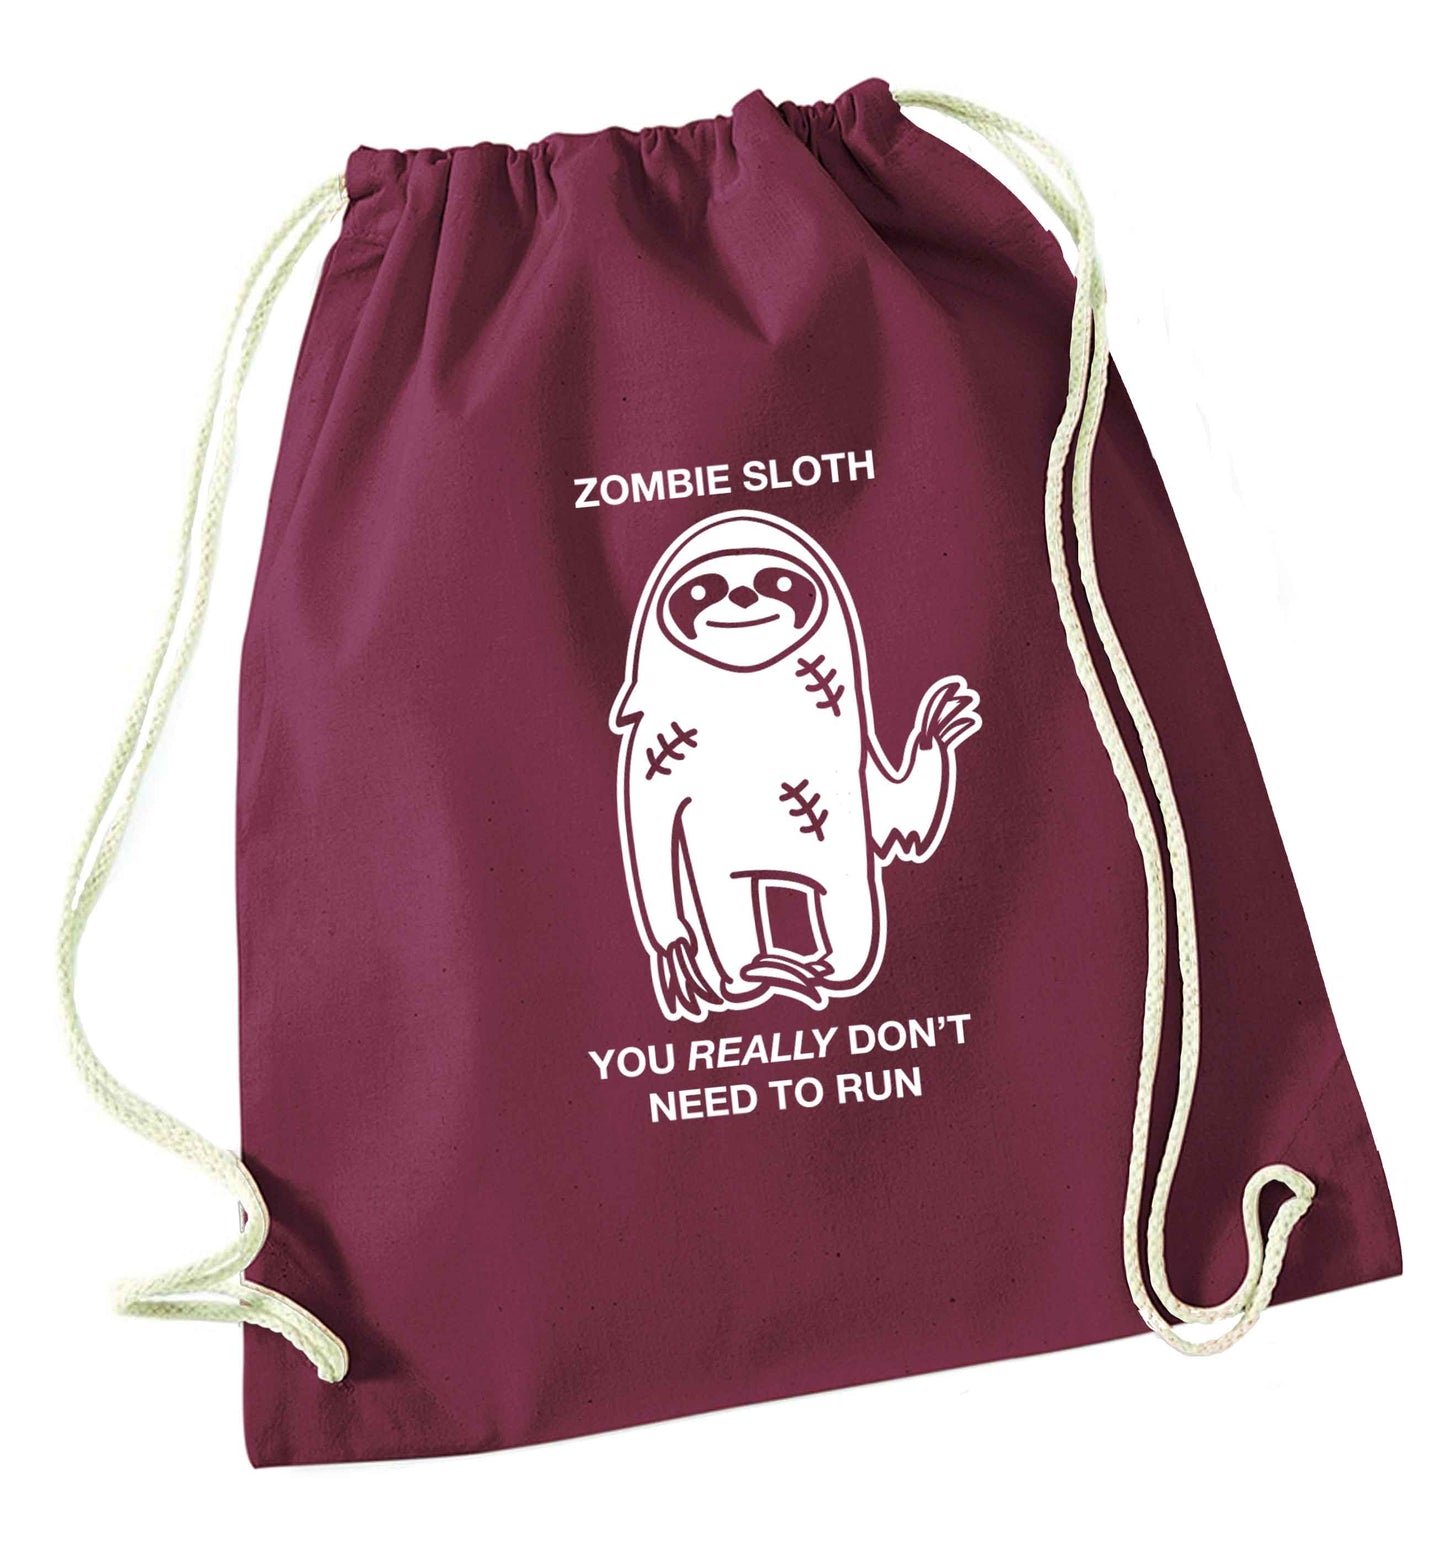 Zombie sloth you really don't need to run maroon drawstring bag